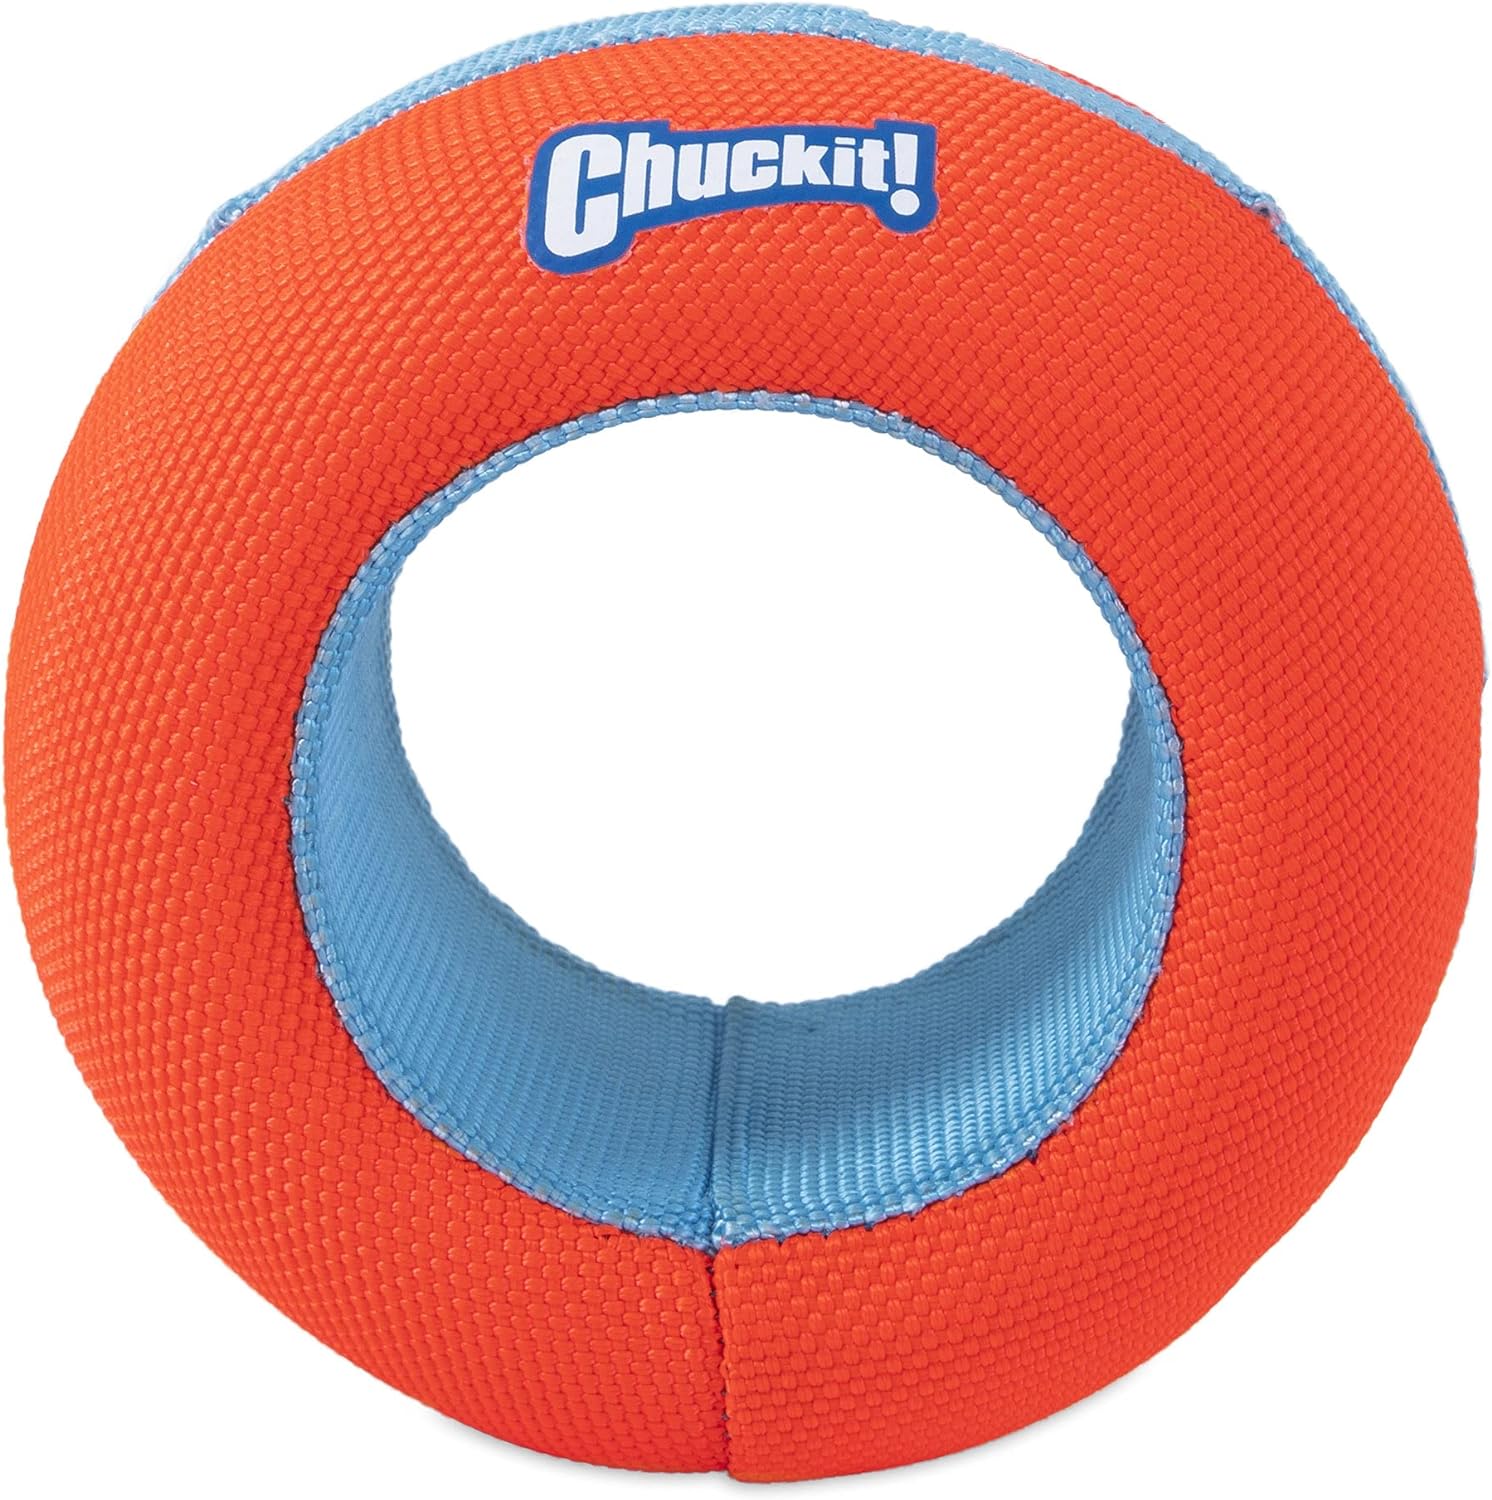 Chuckit! Amphibious Mega Ball or Roller That Floats for Medium